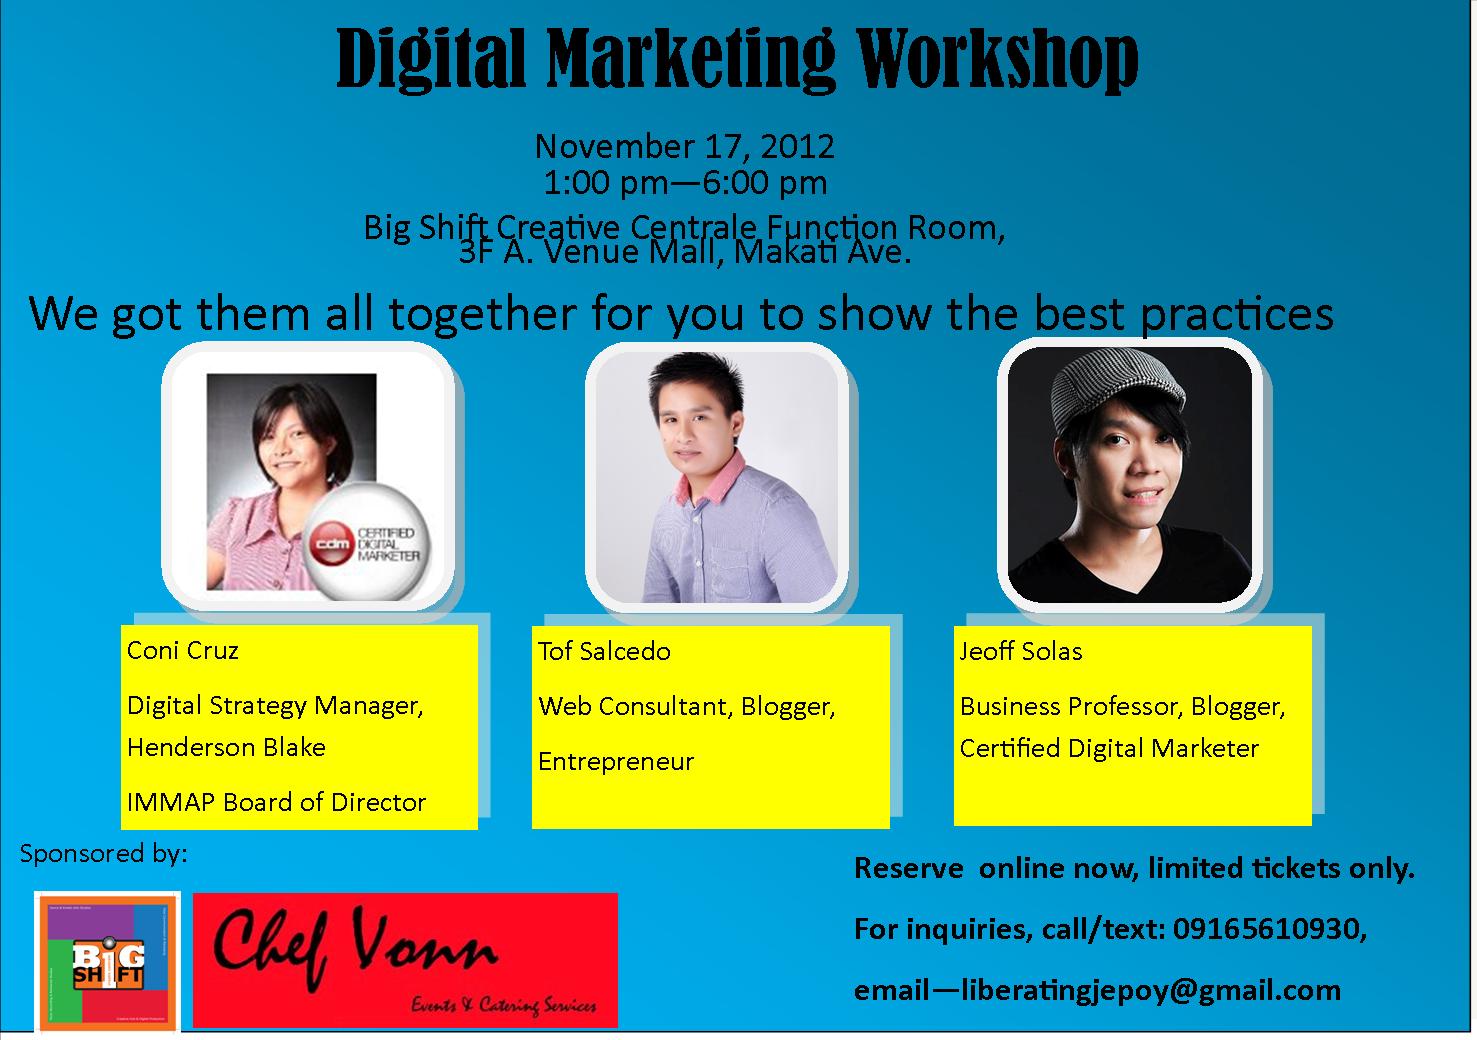 Digital Marketing Workshop this November 17, 2012